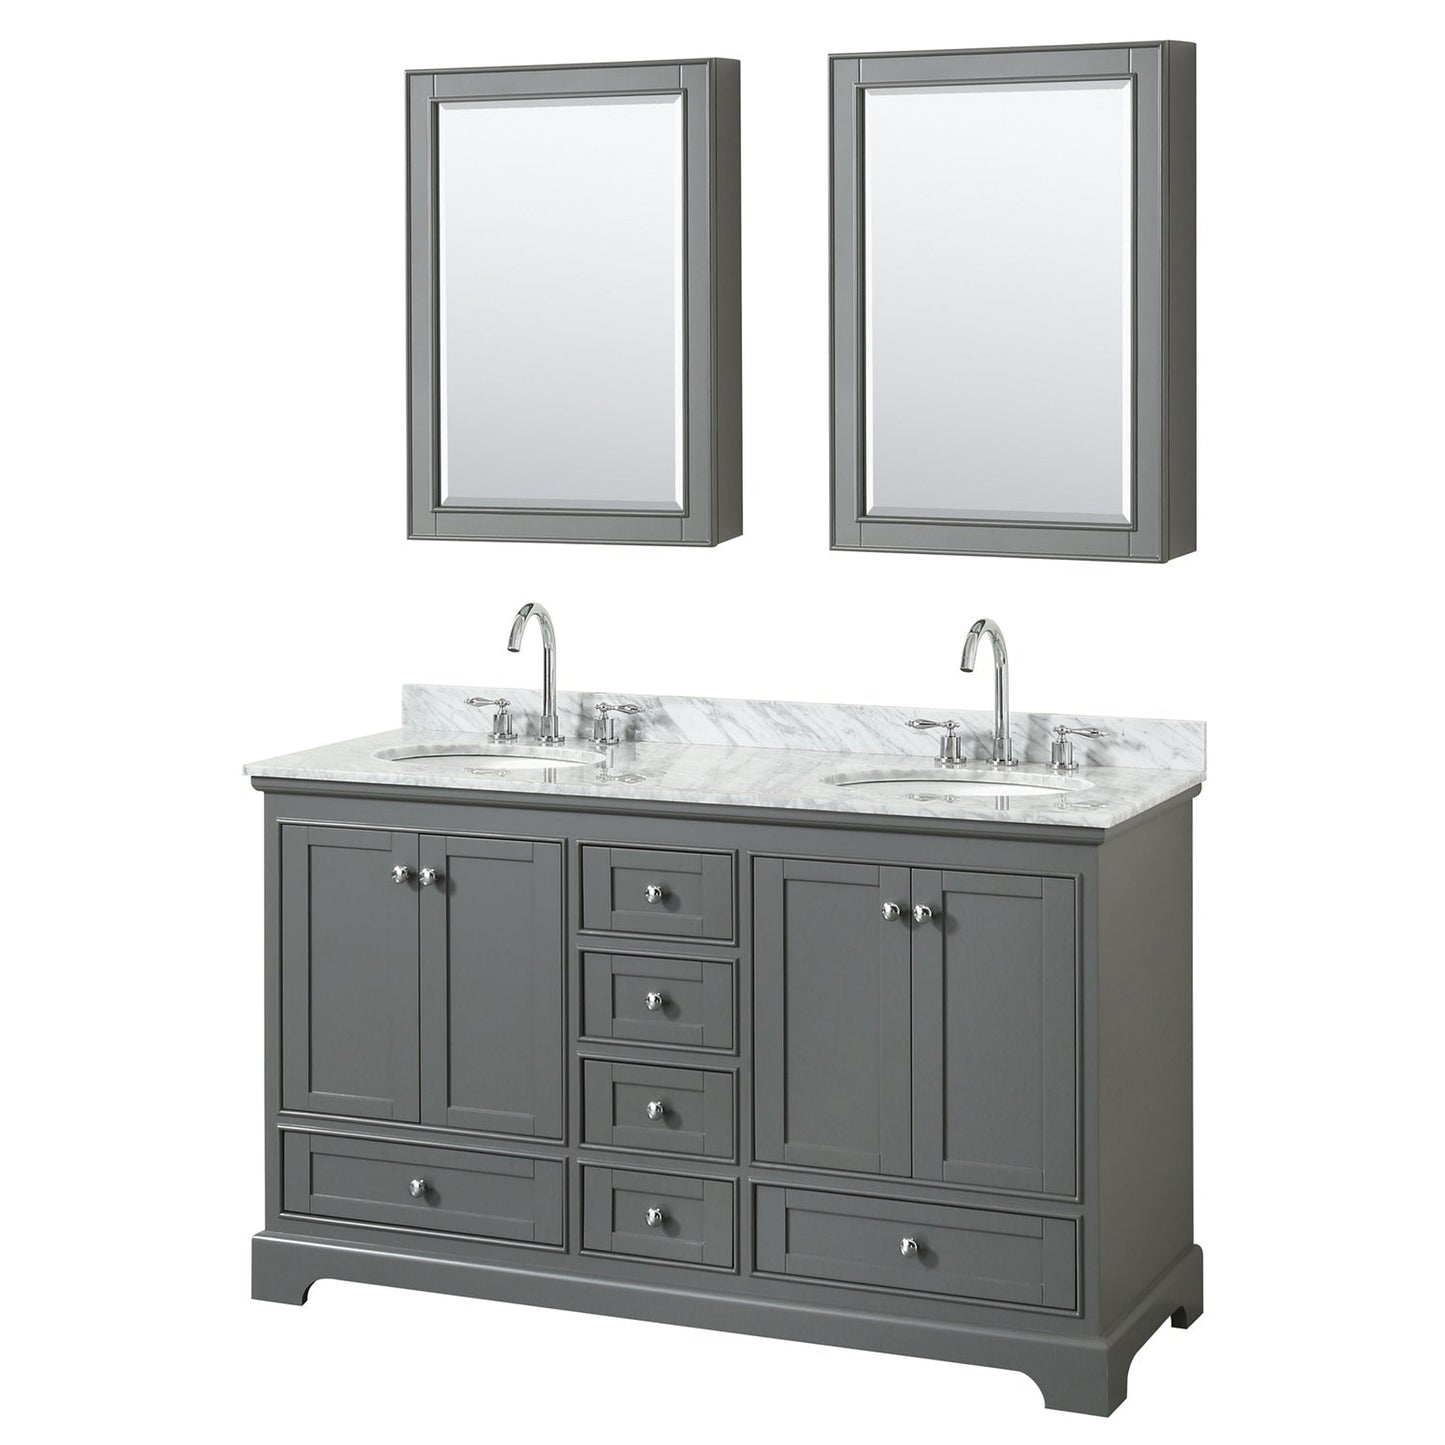 Wyndham Collection Deborah 60" Double Bathroom Vanity in Dark Gray, White Carrara Marble Countertop, Undermount Oval Sinks, and Medicine Cabinet